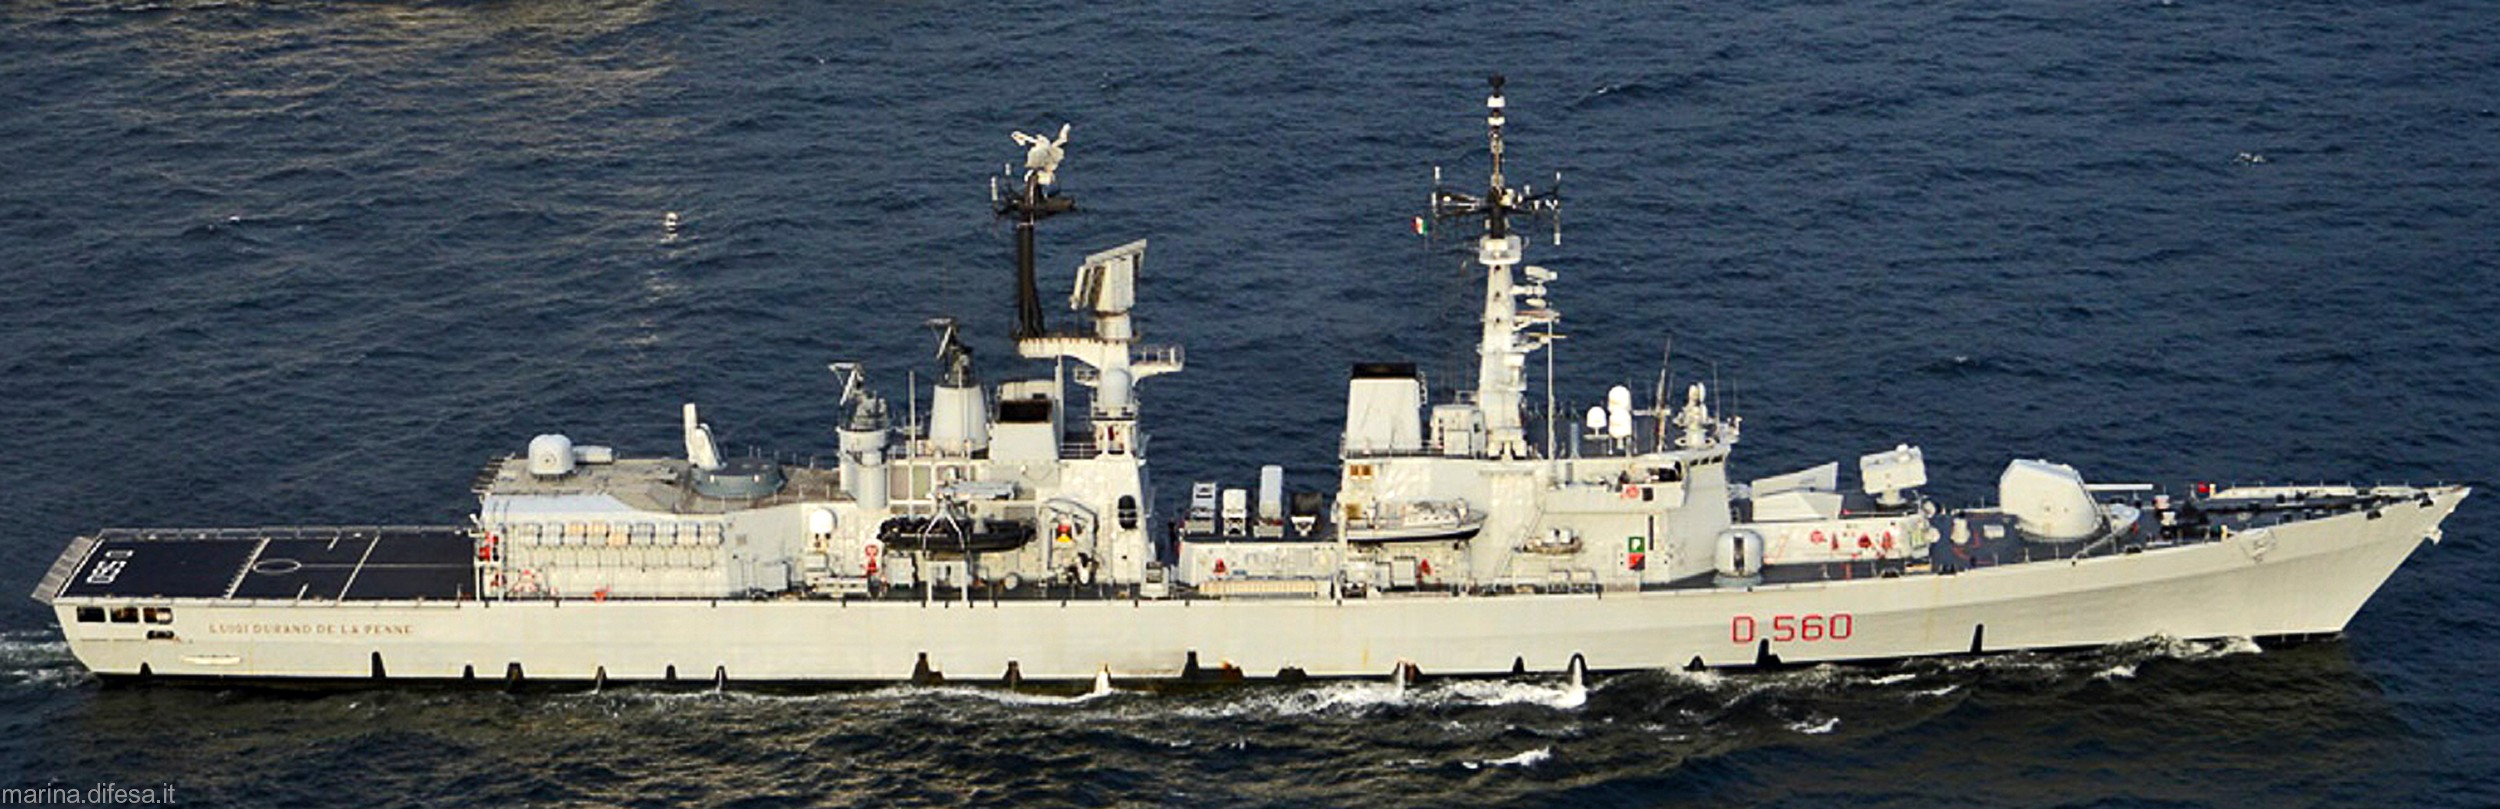 d-560 luigi durand de la penne its nave guided missile destroyer ddg italian navy marina militare 14